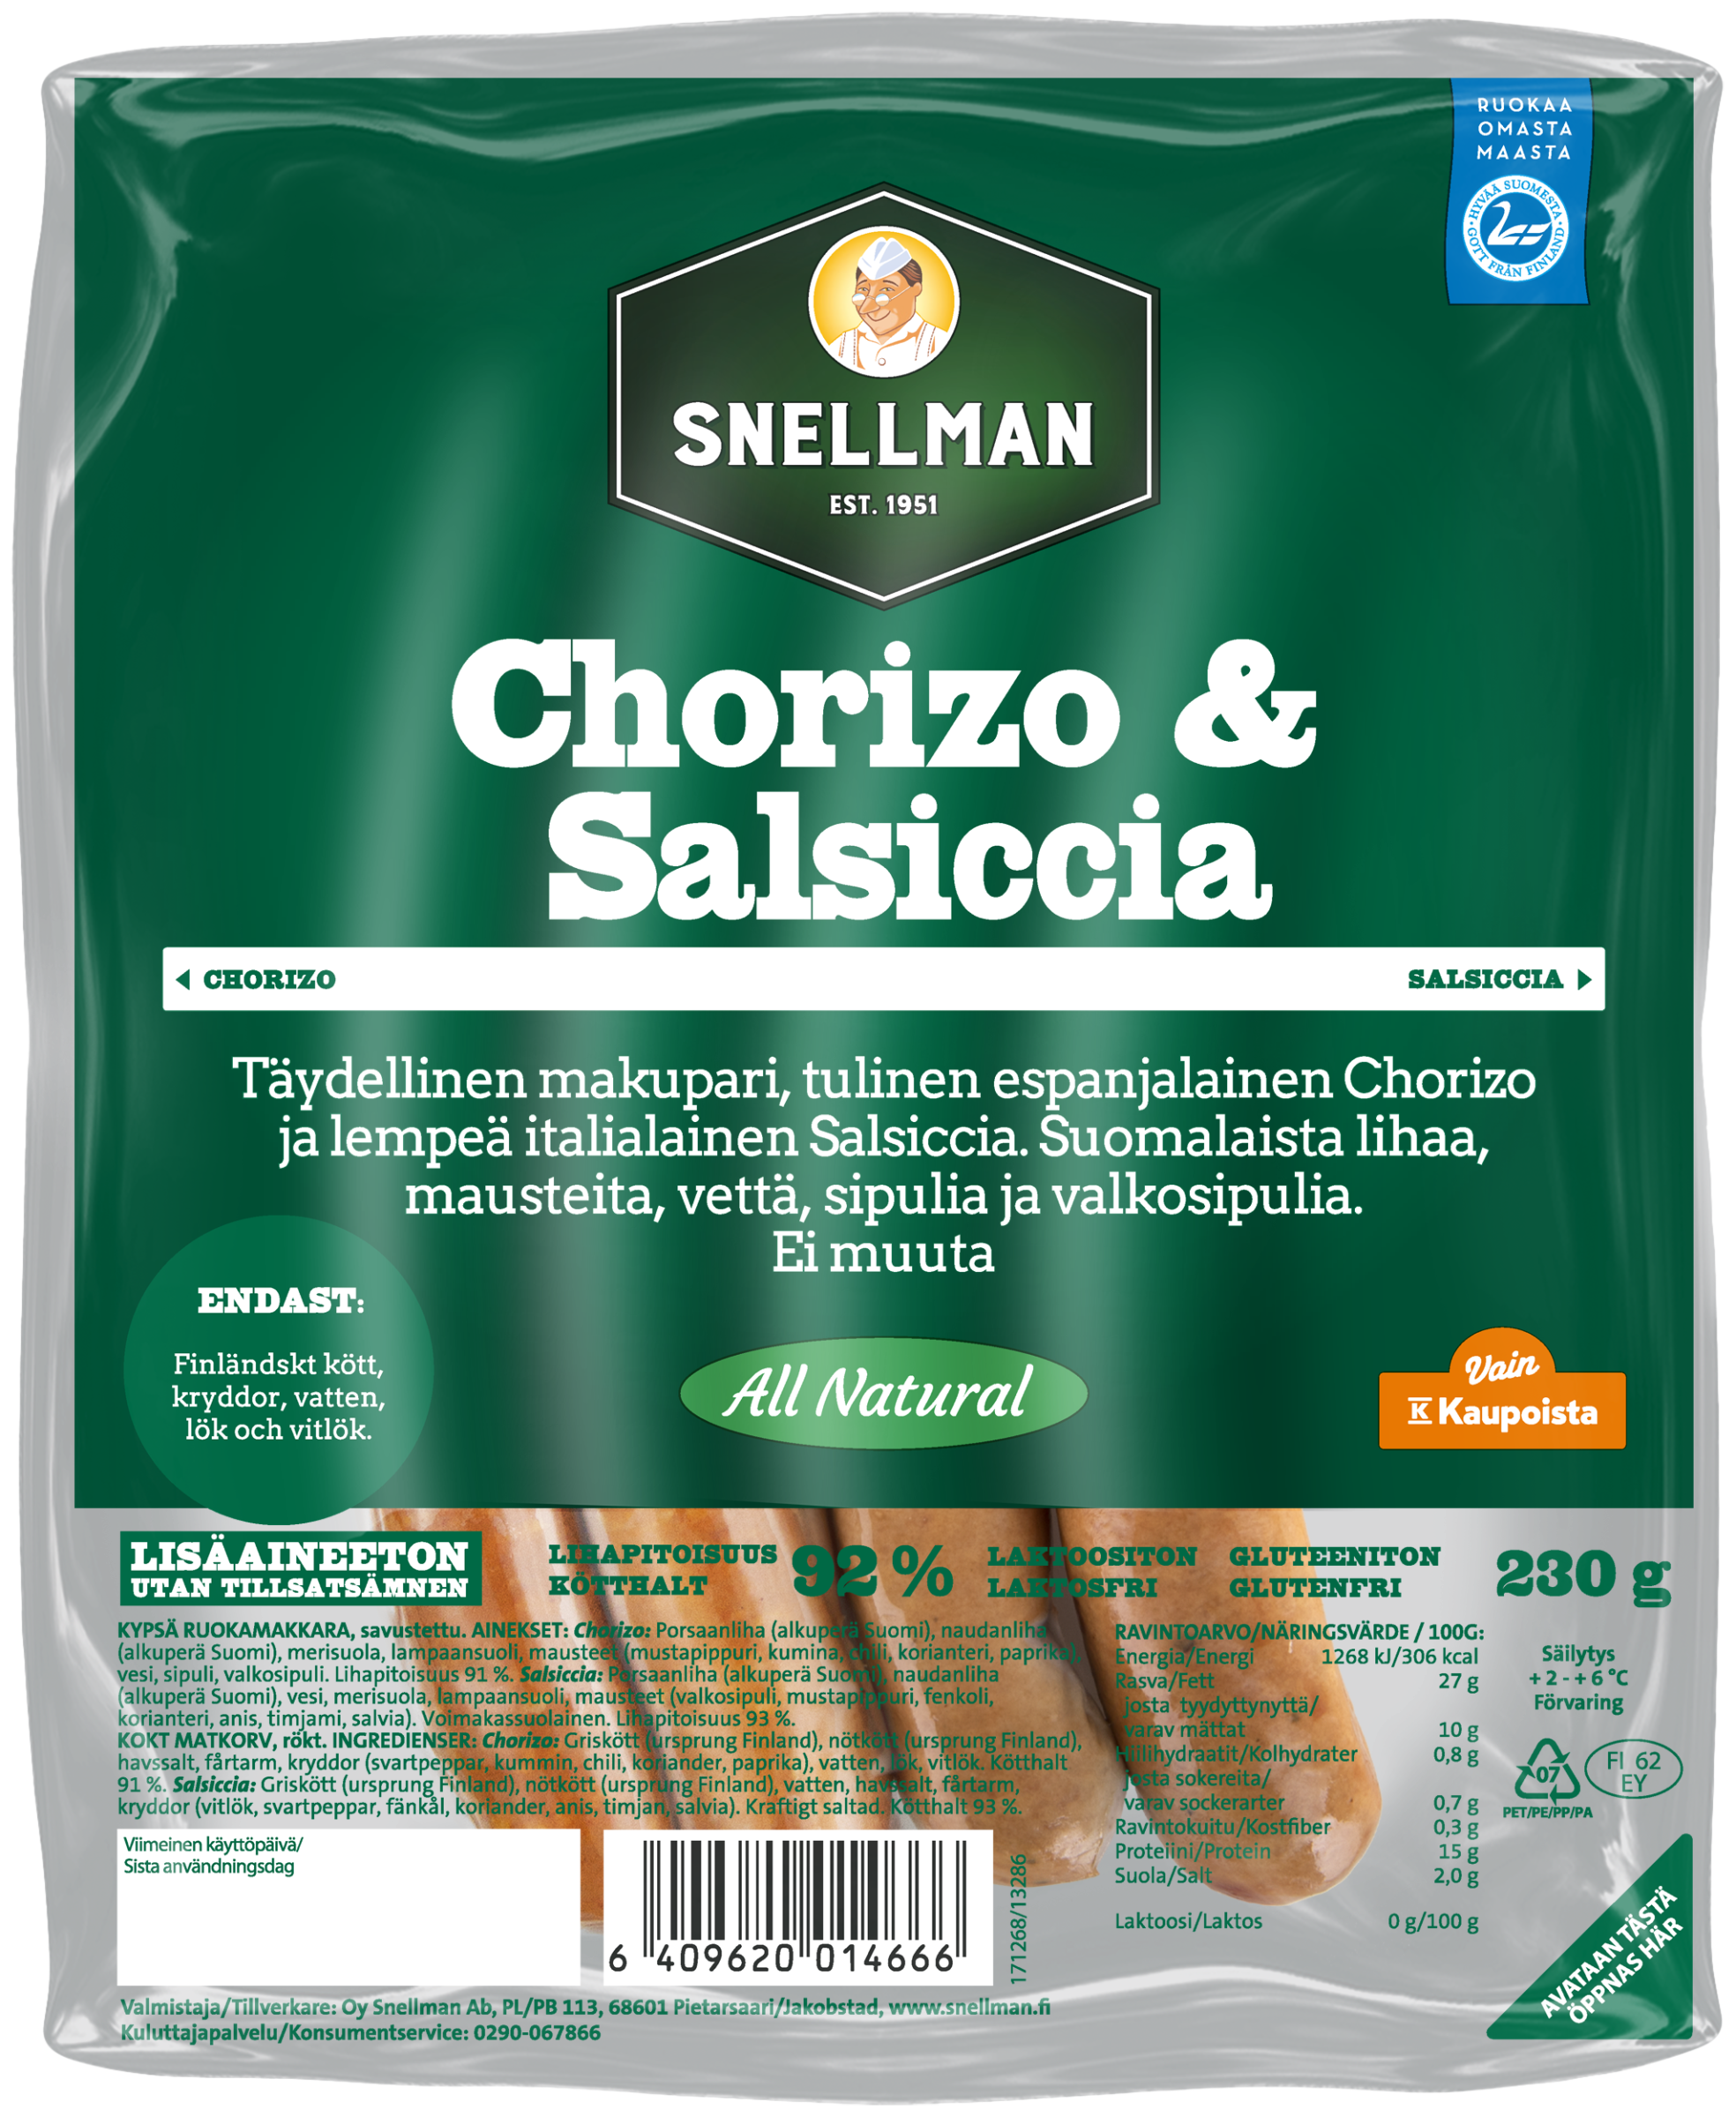 All Natural Chorizo & Salsiccia